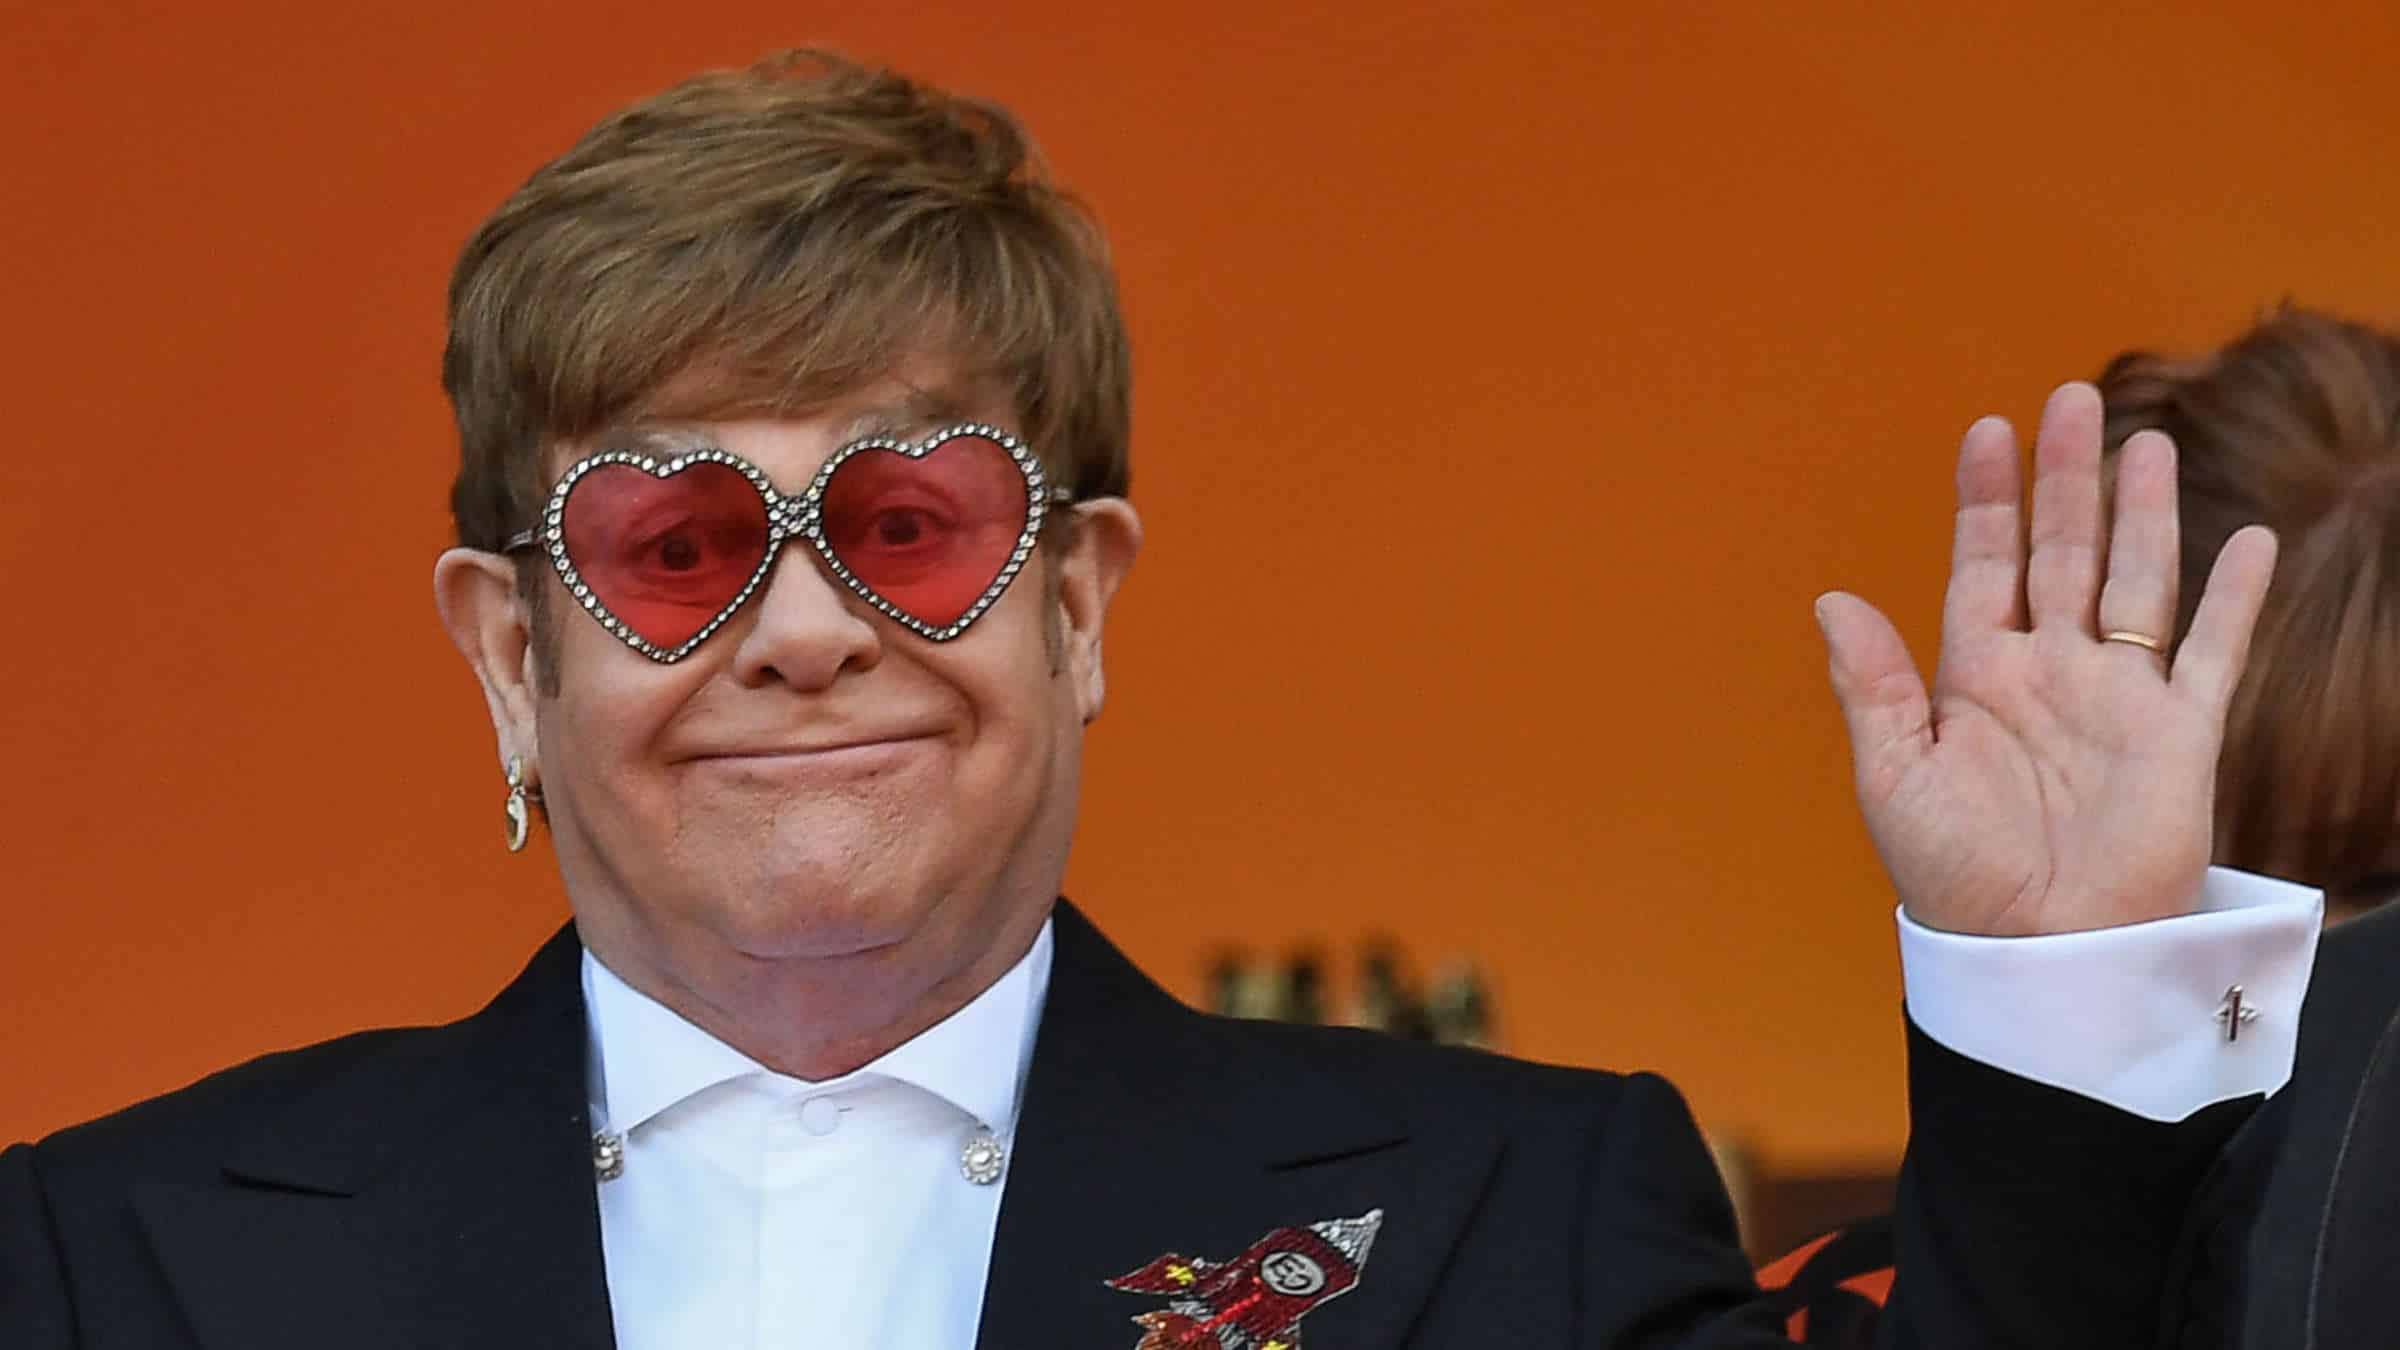 Sir Elton John gets his own commemorative coin